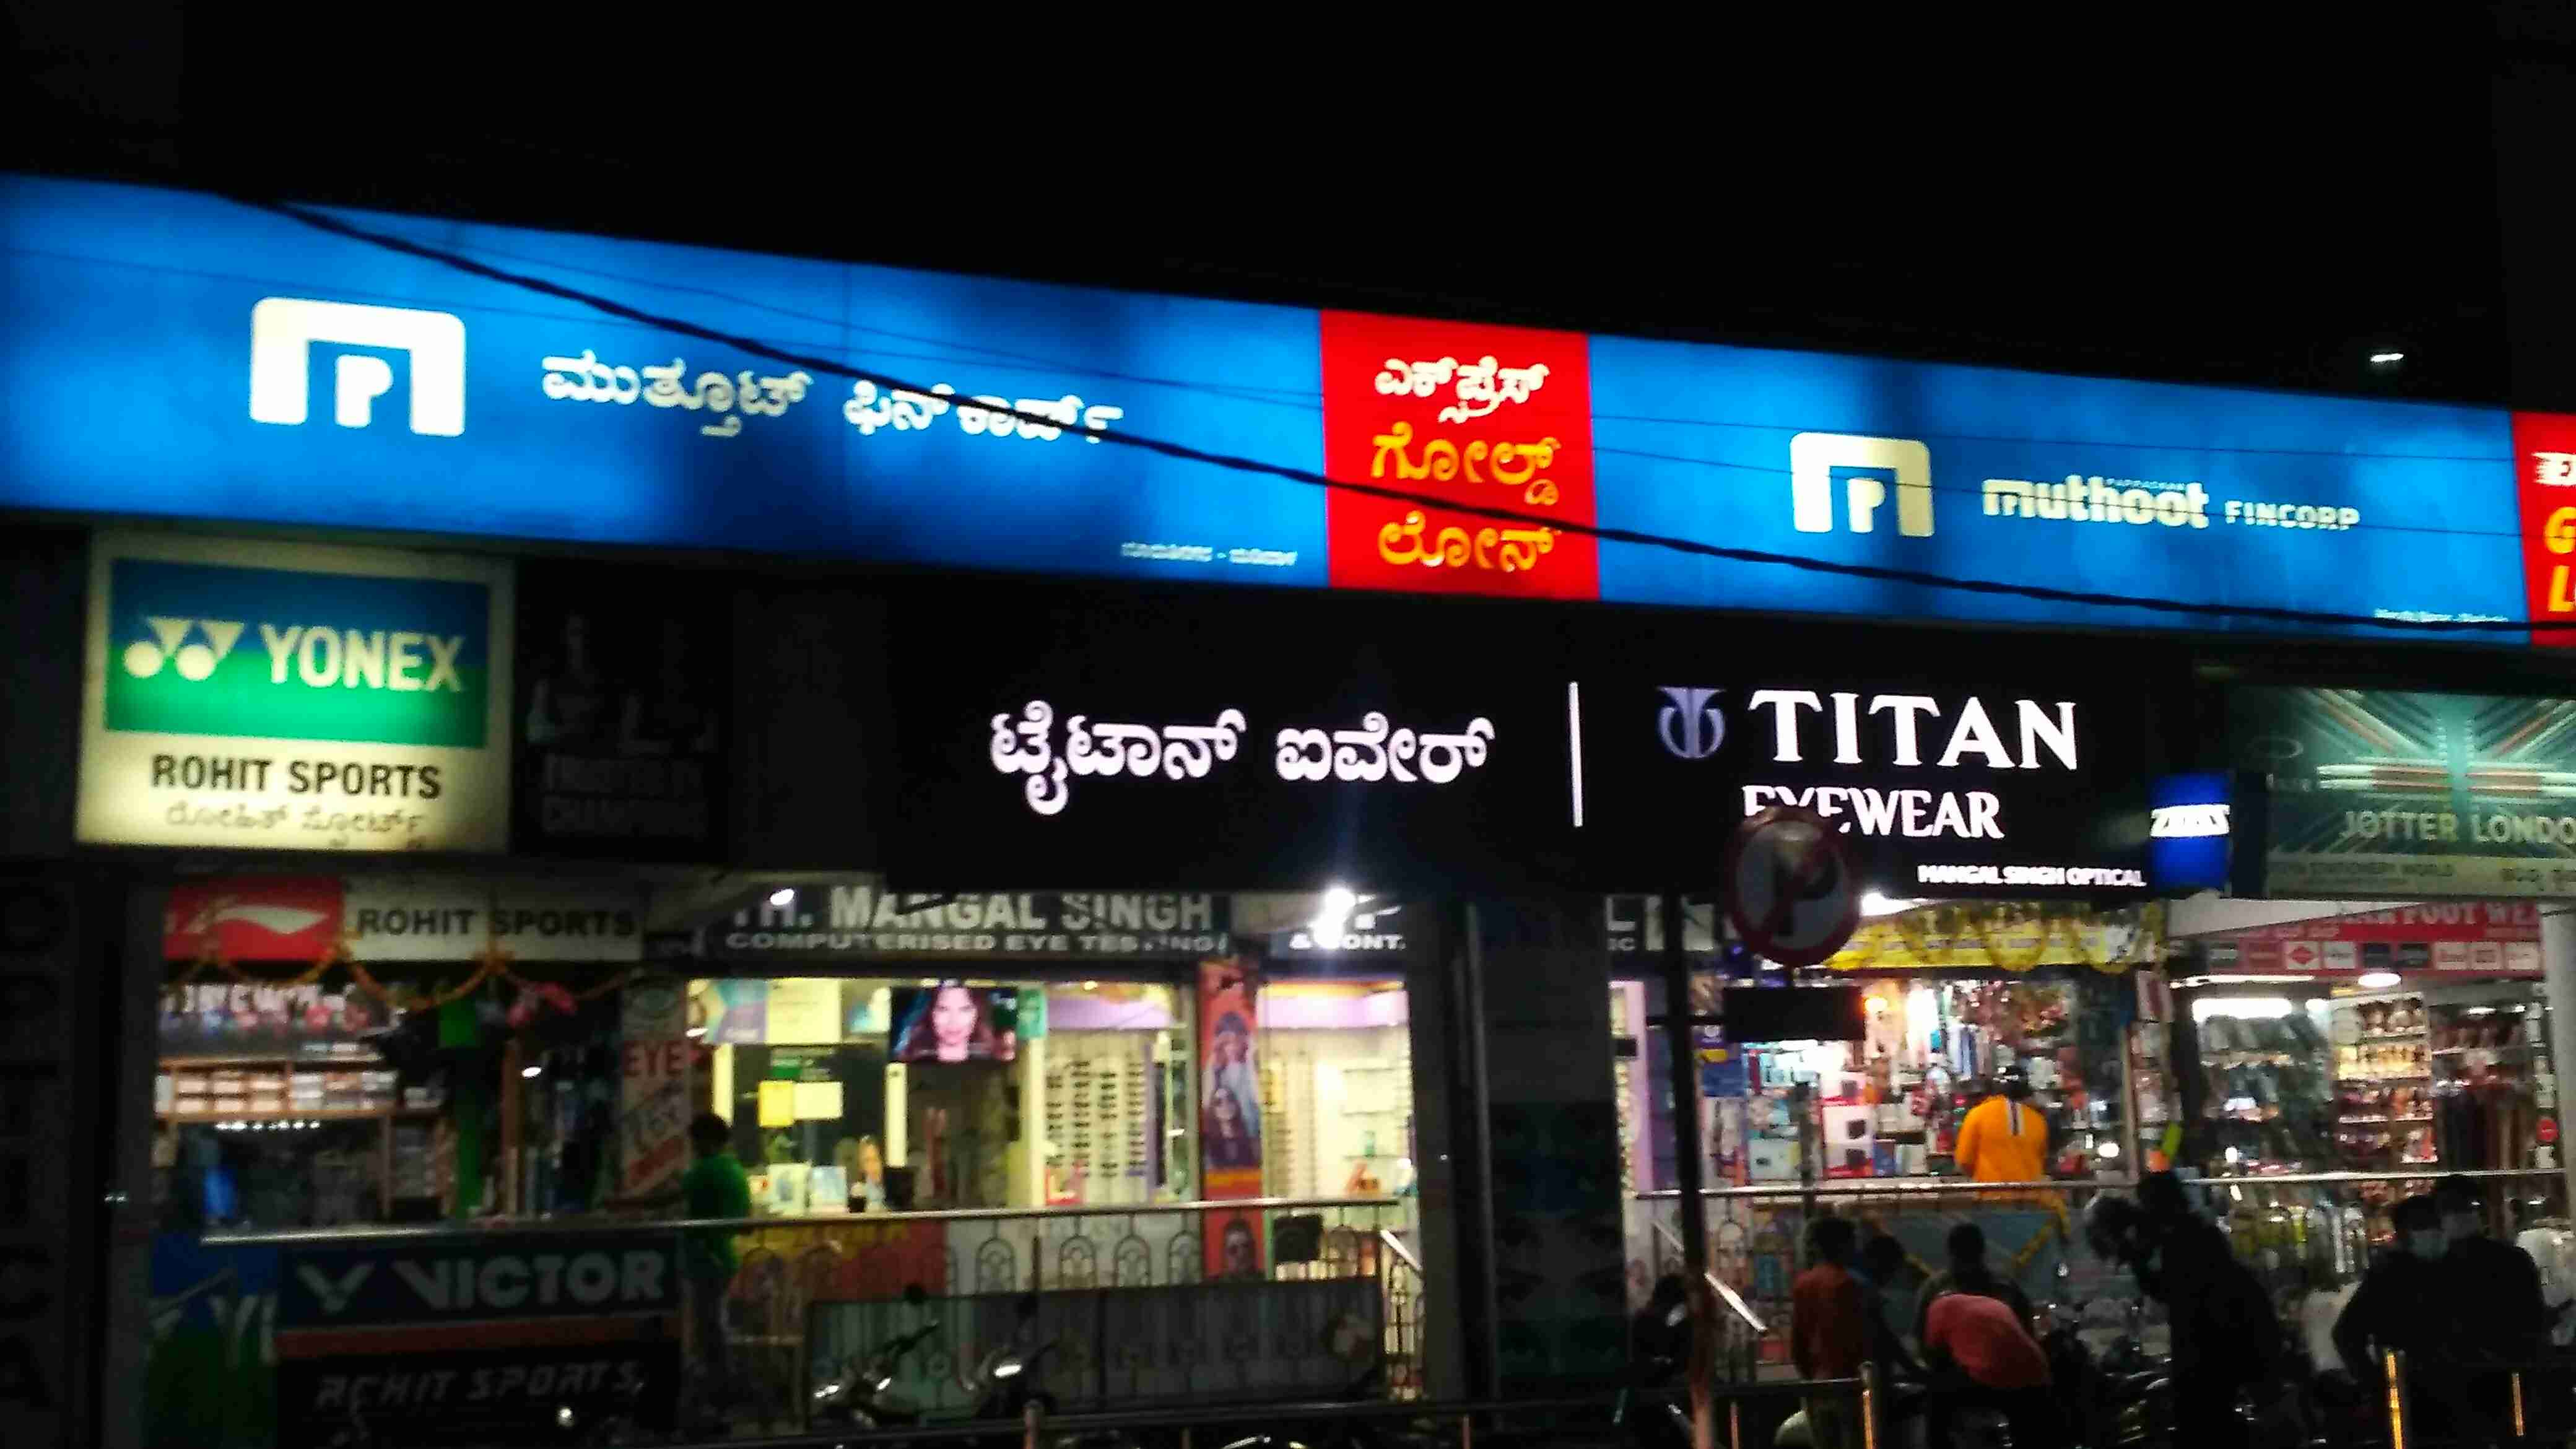 Muthoot Fincorp Gold Loan Services in Madiwala, Bengaluru, Karnataka